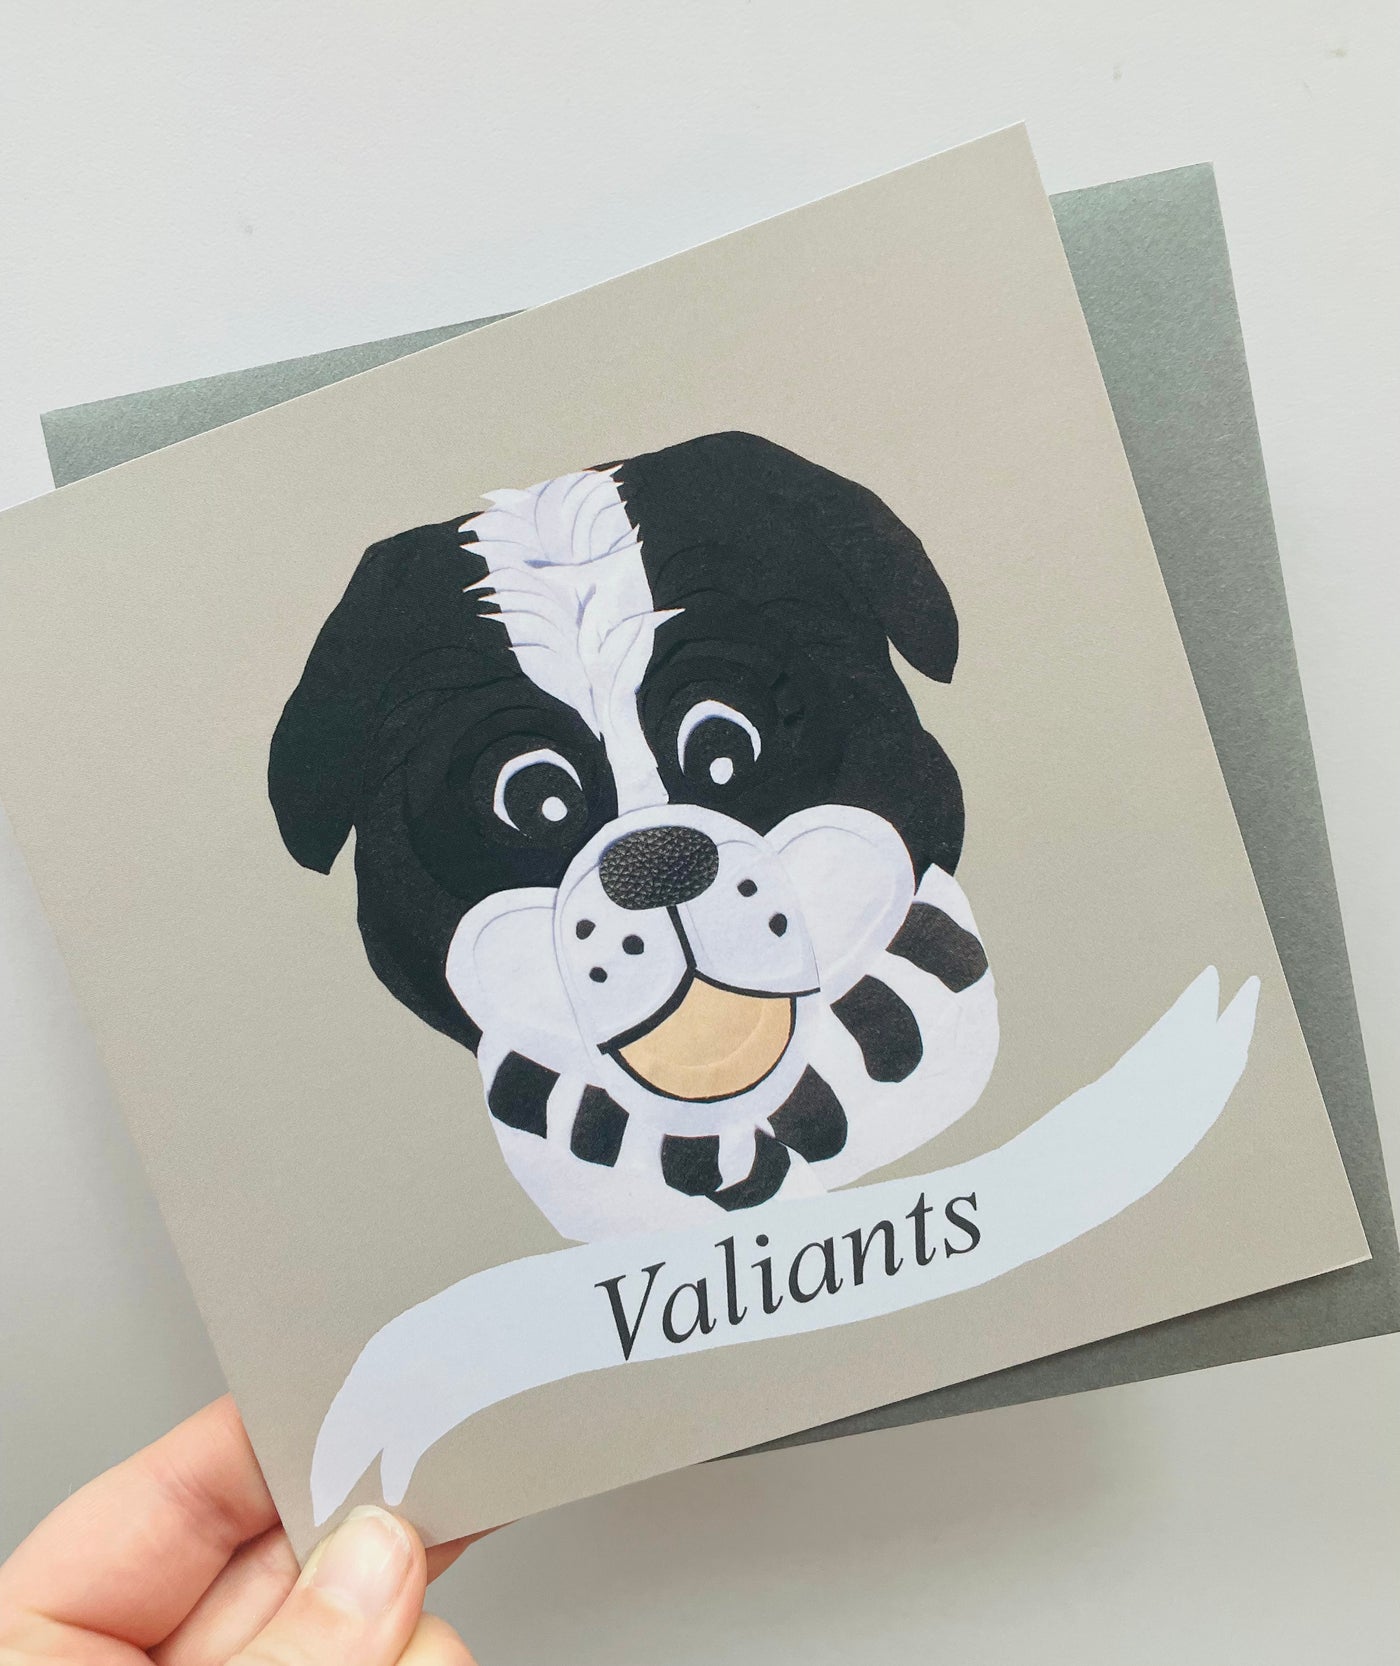 Cushy Paws Port Vale Boomer the Dog Mascot Valiants Blank Card